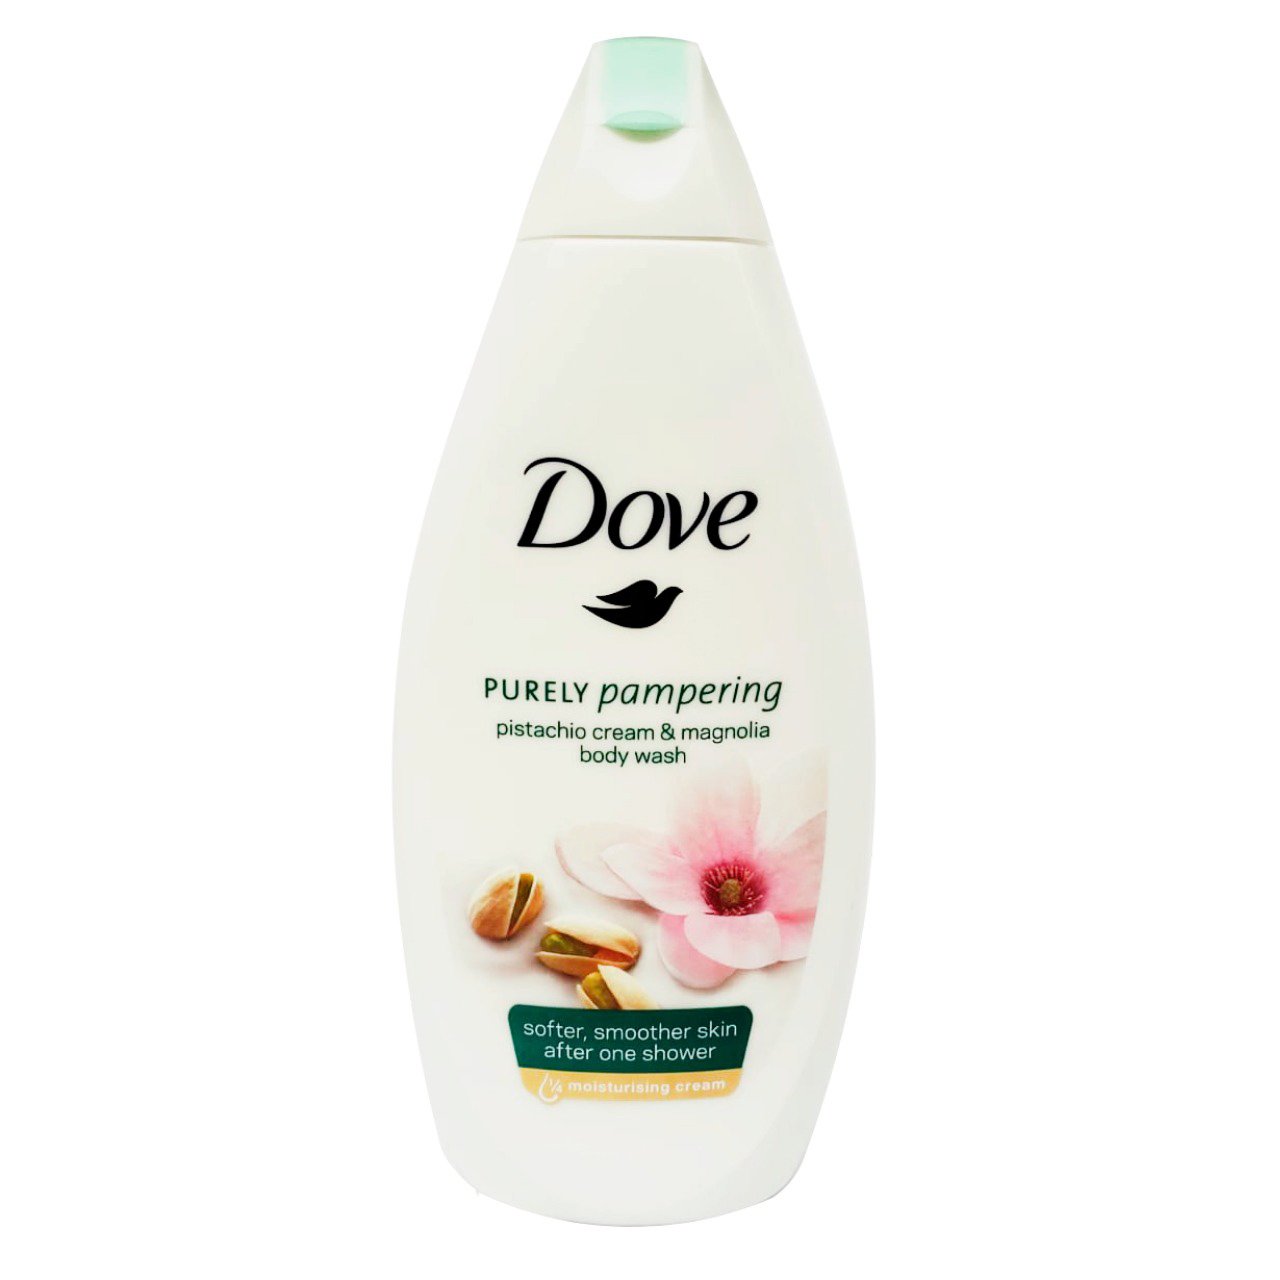 Dove Pistachio Cream & Magnolia Body Wash Χαλαρωτικό Αφρόλουτρο με Άρωμα Μανόλιας για Αίσθηση Εμπειρίας Spa στο Σπίτι 500ml